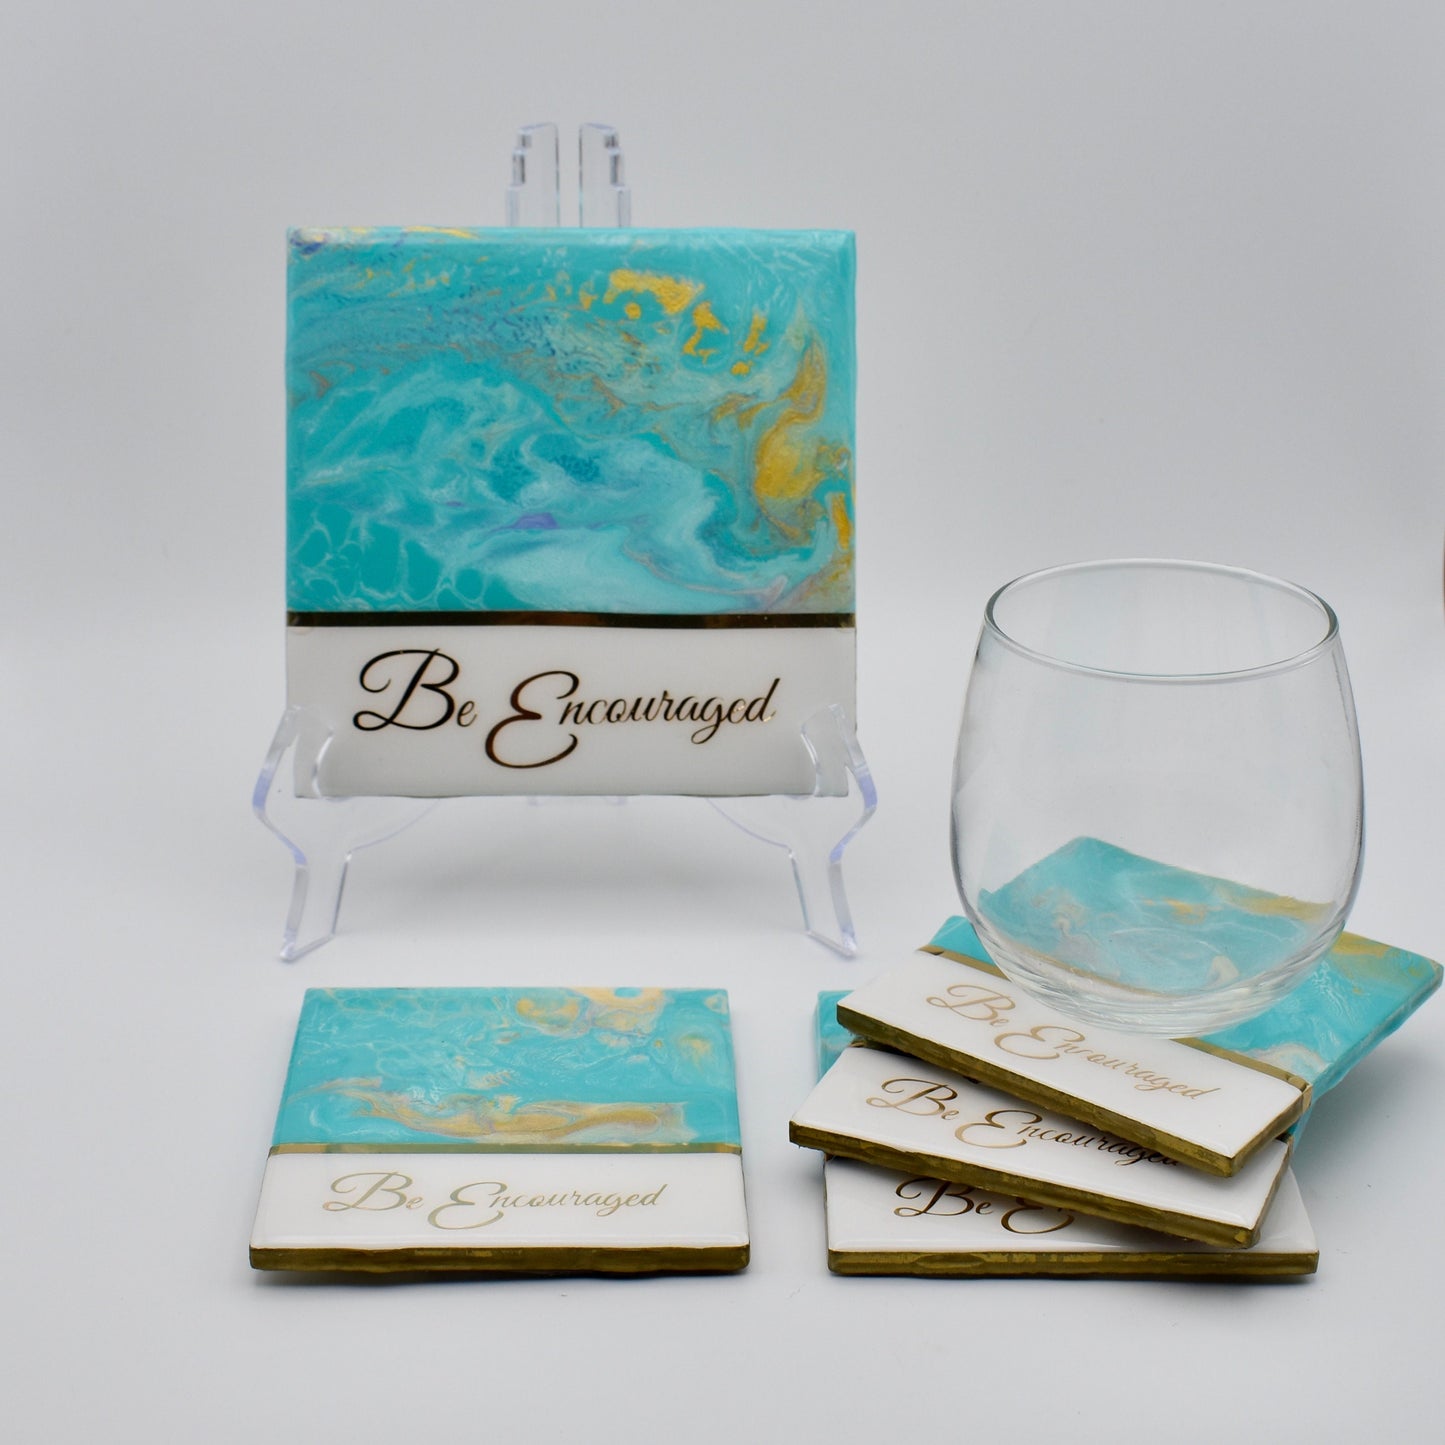 "Be Encouraged" Inspirational Coasters